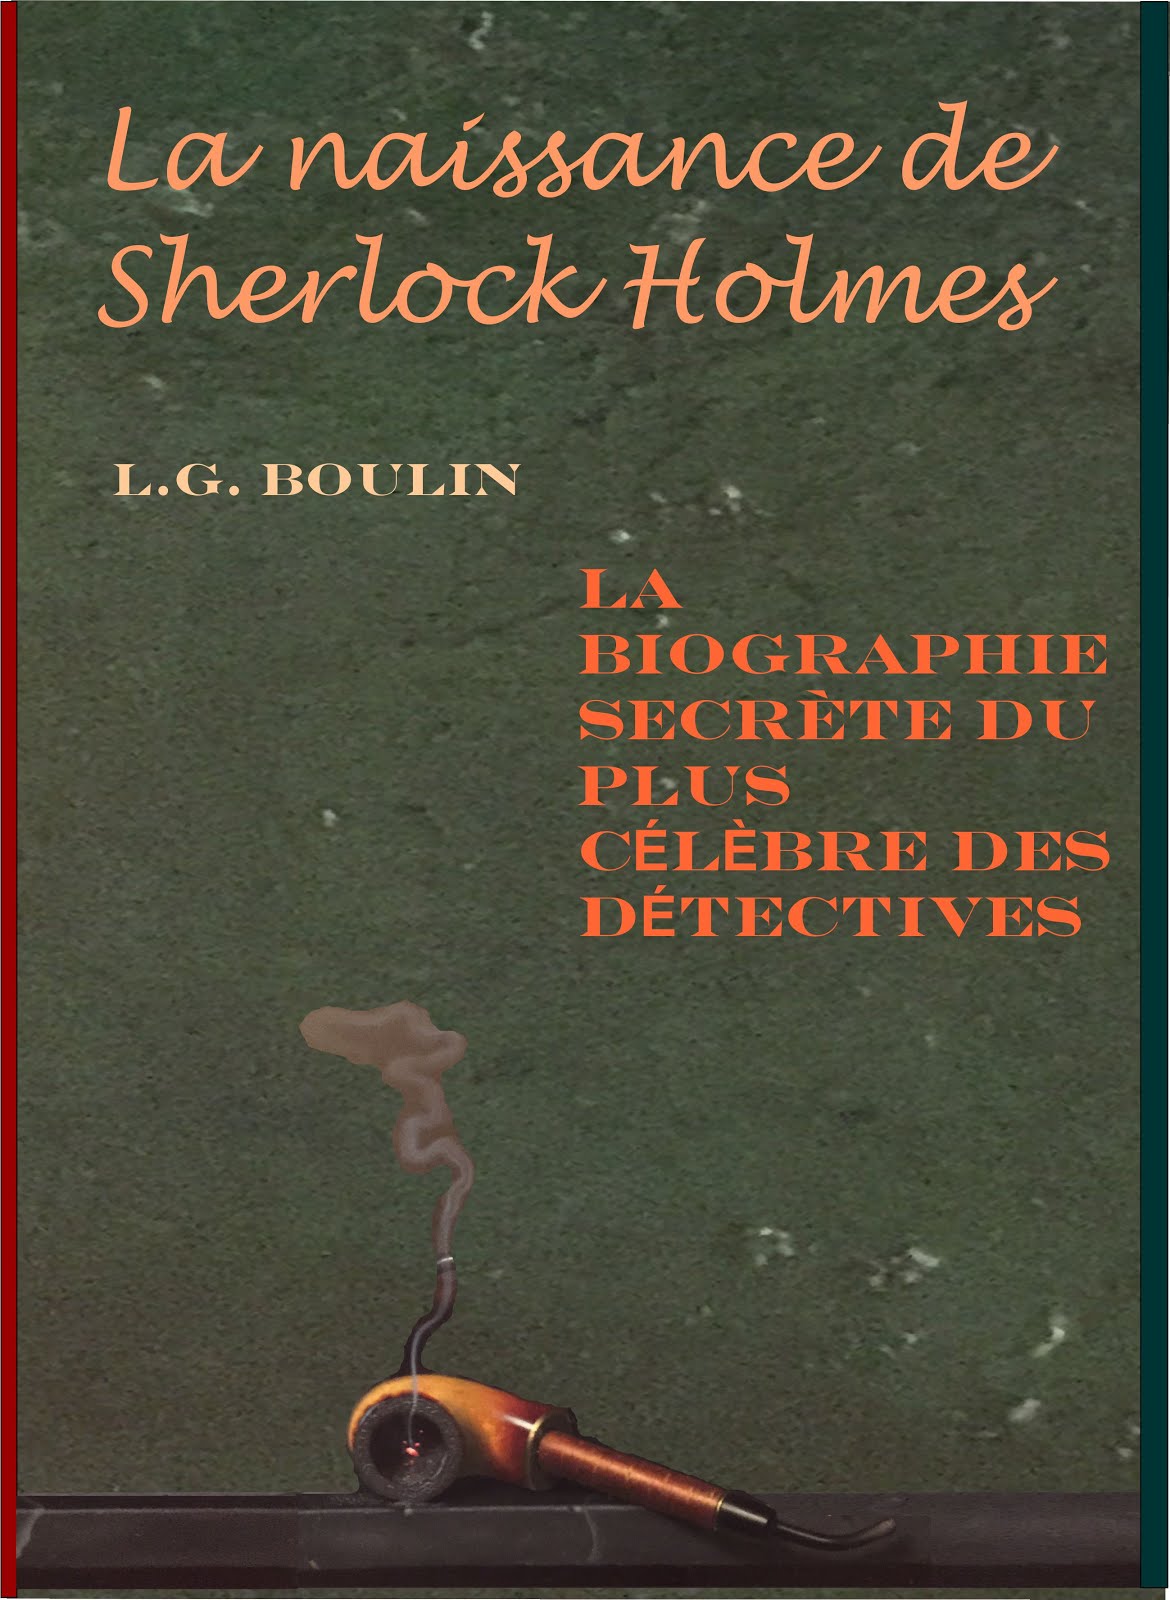 La naissance de Sherlock Holmes